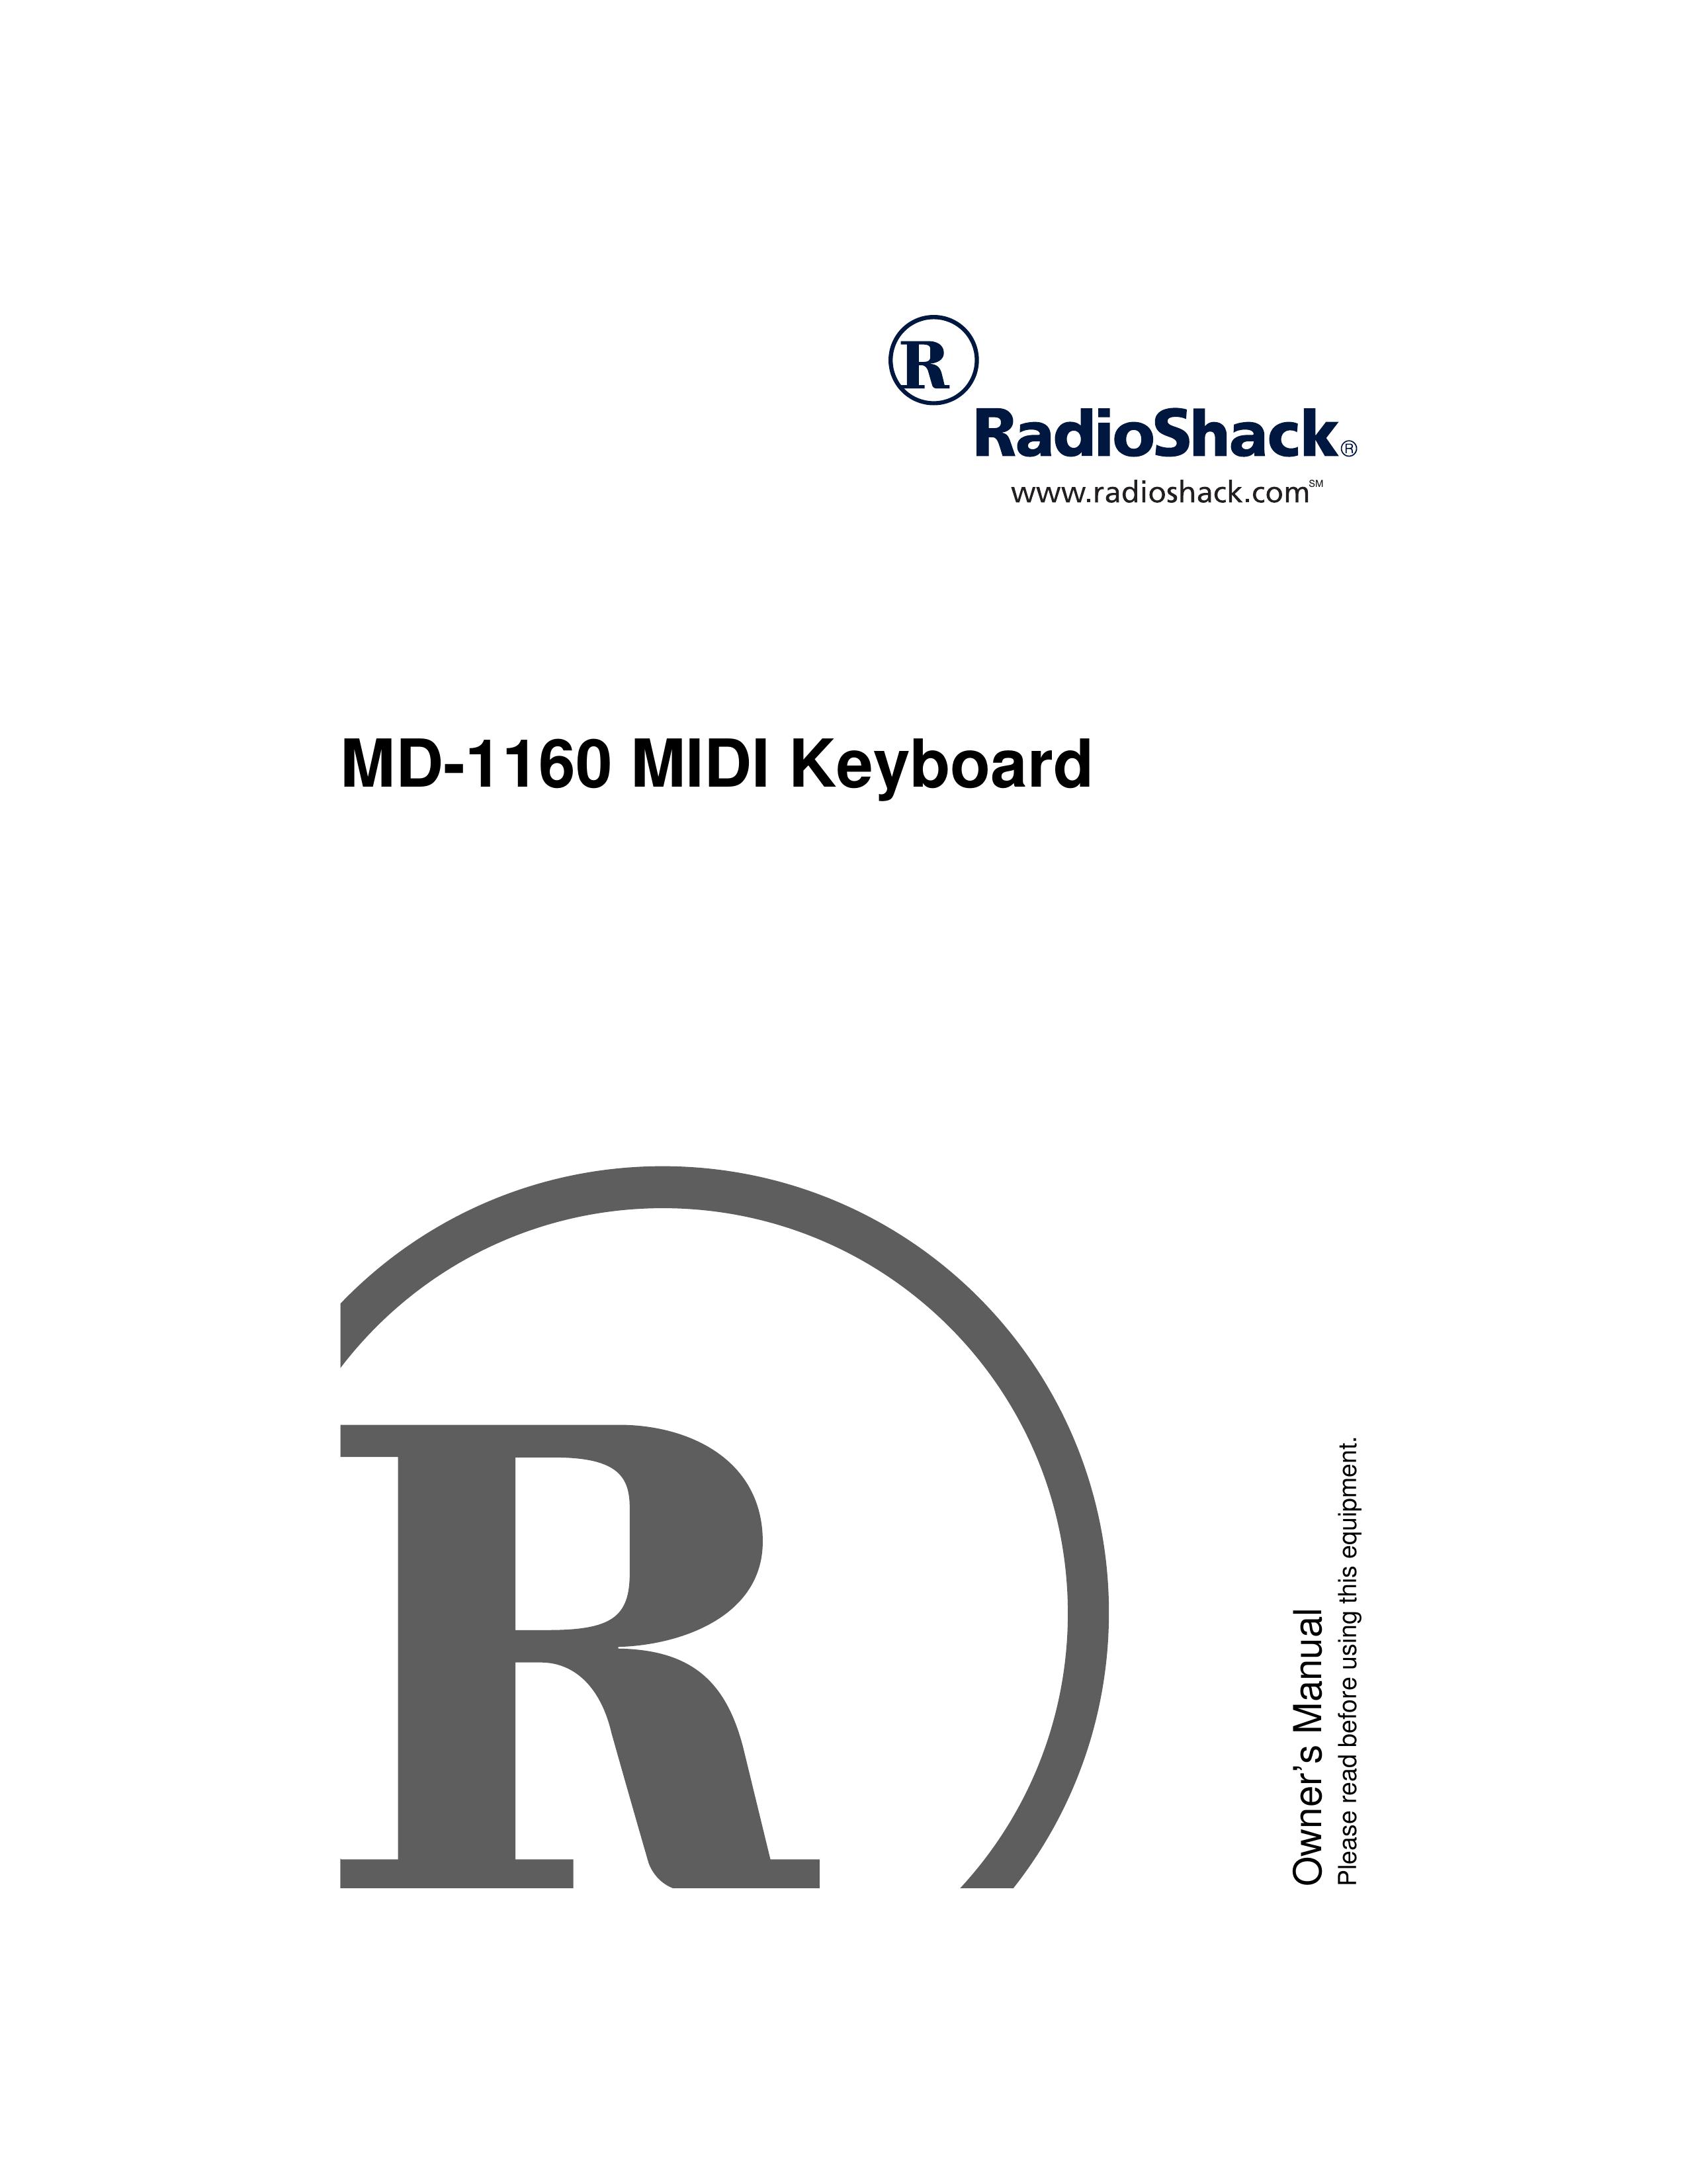 Radio Shack MD-1160 Electronic Keyboard User Manual